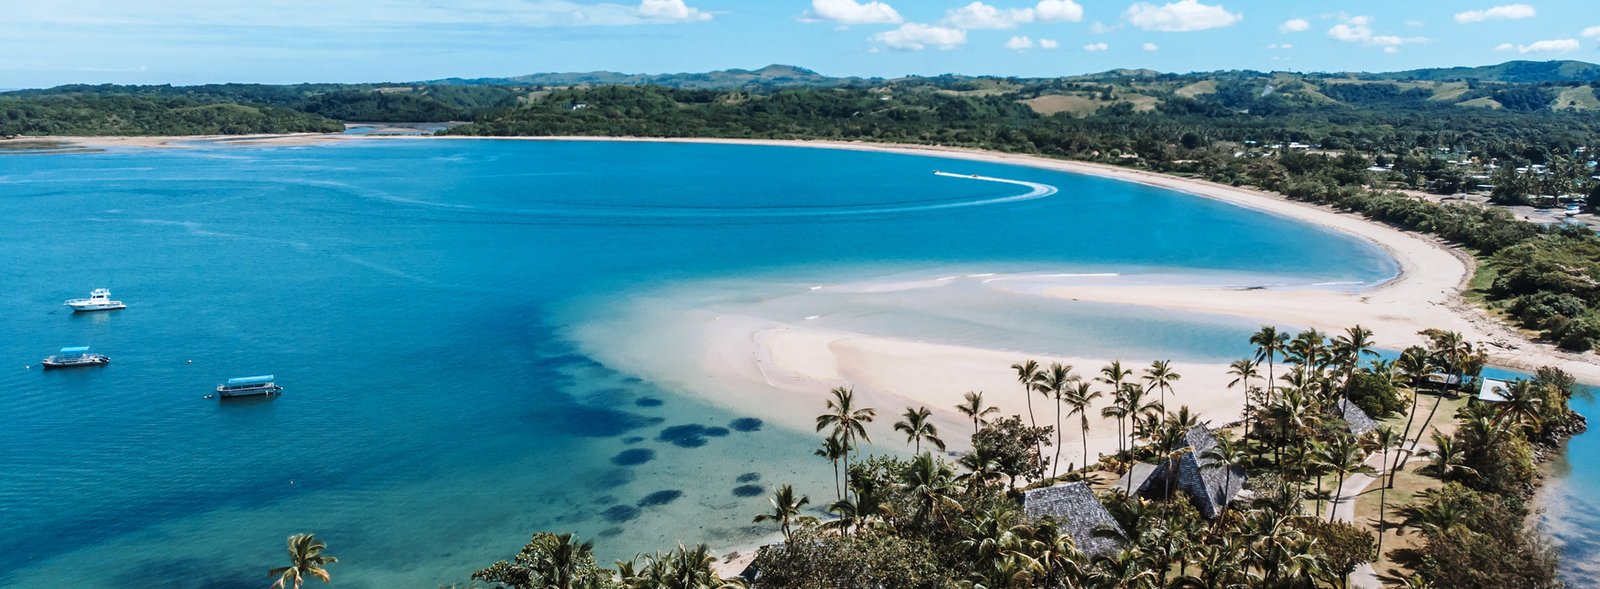 Yanuca Island Fiji Map Hotel Review: Shangri-La Fijian Resort & Spa, Yanuca Island, Fiji – The  Seat In The Middle